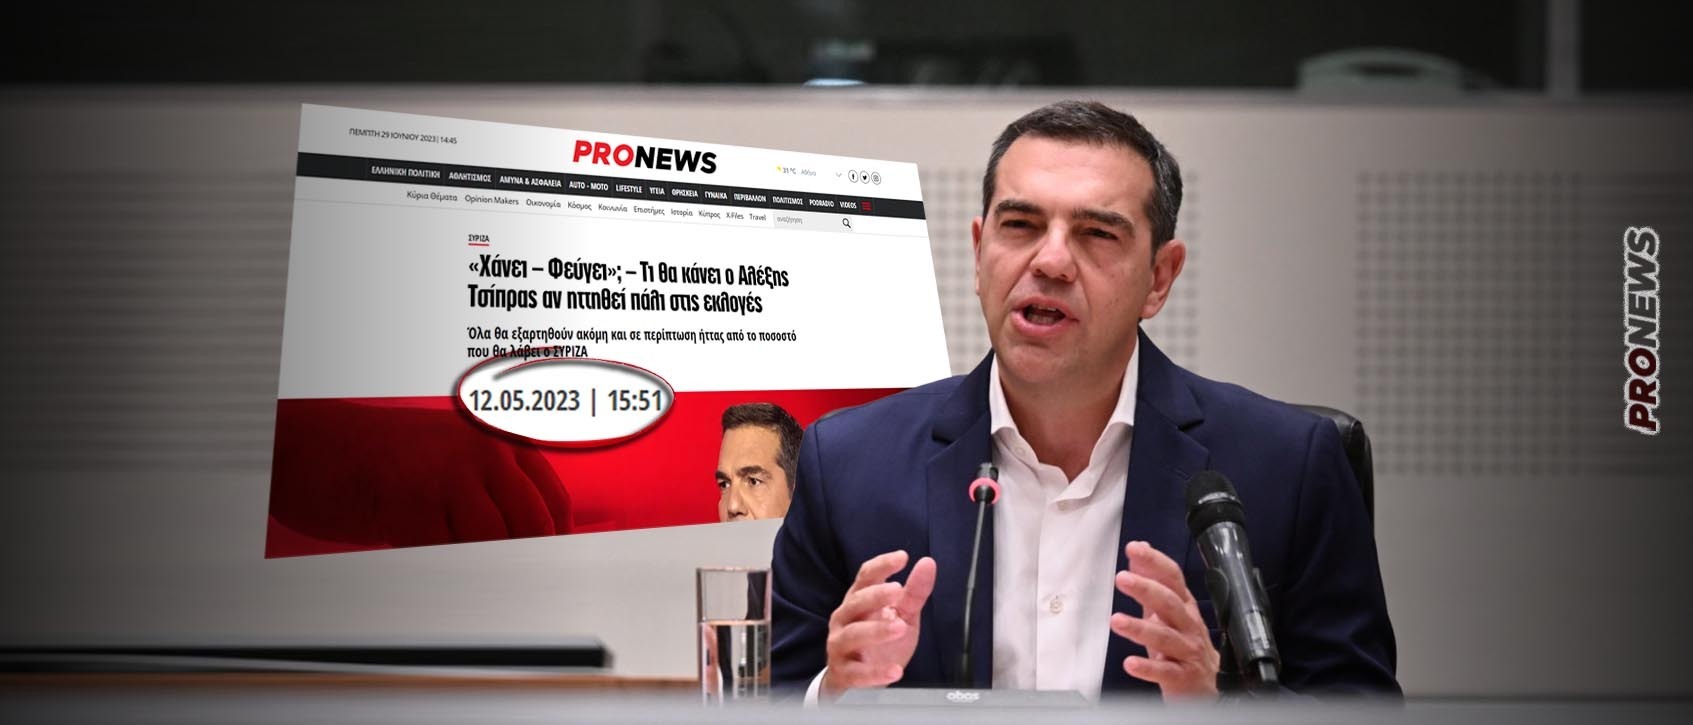 www.pronews.gr